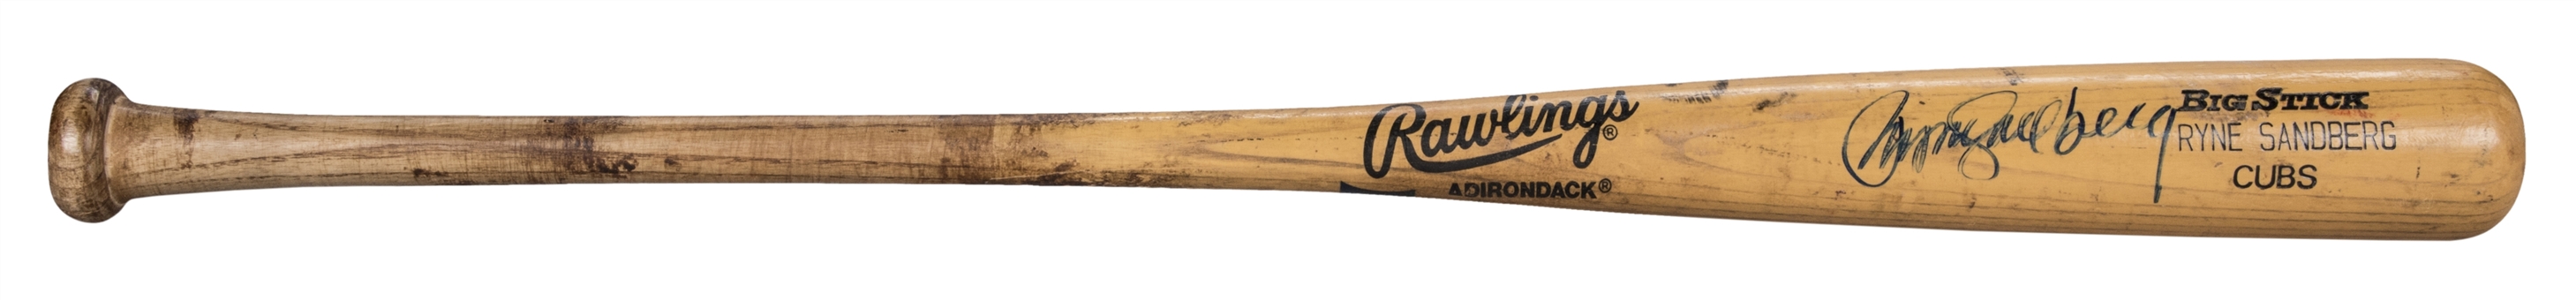 1992 Ryne Sandberg Game Used and Signed Adrondack Rawlings 256B Model Bat (PSA/DNA GU 9.5)